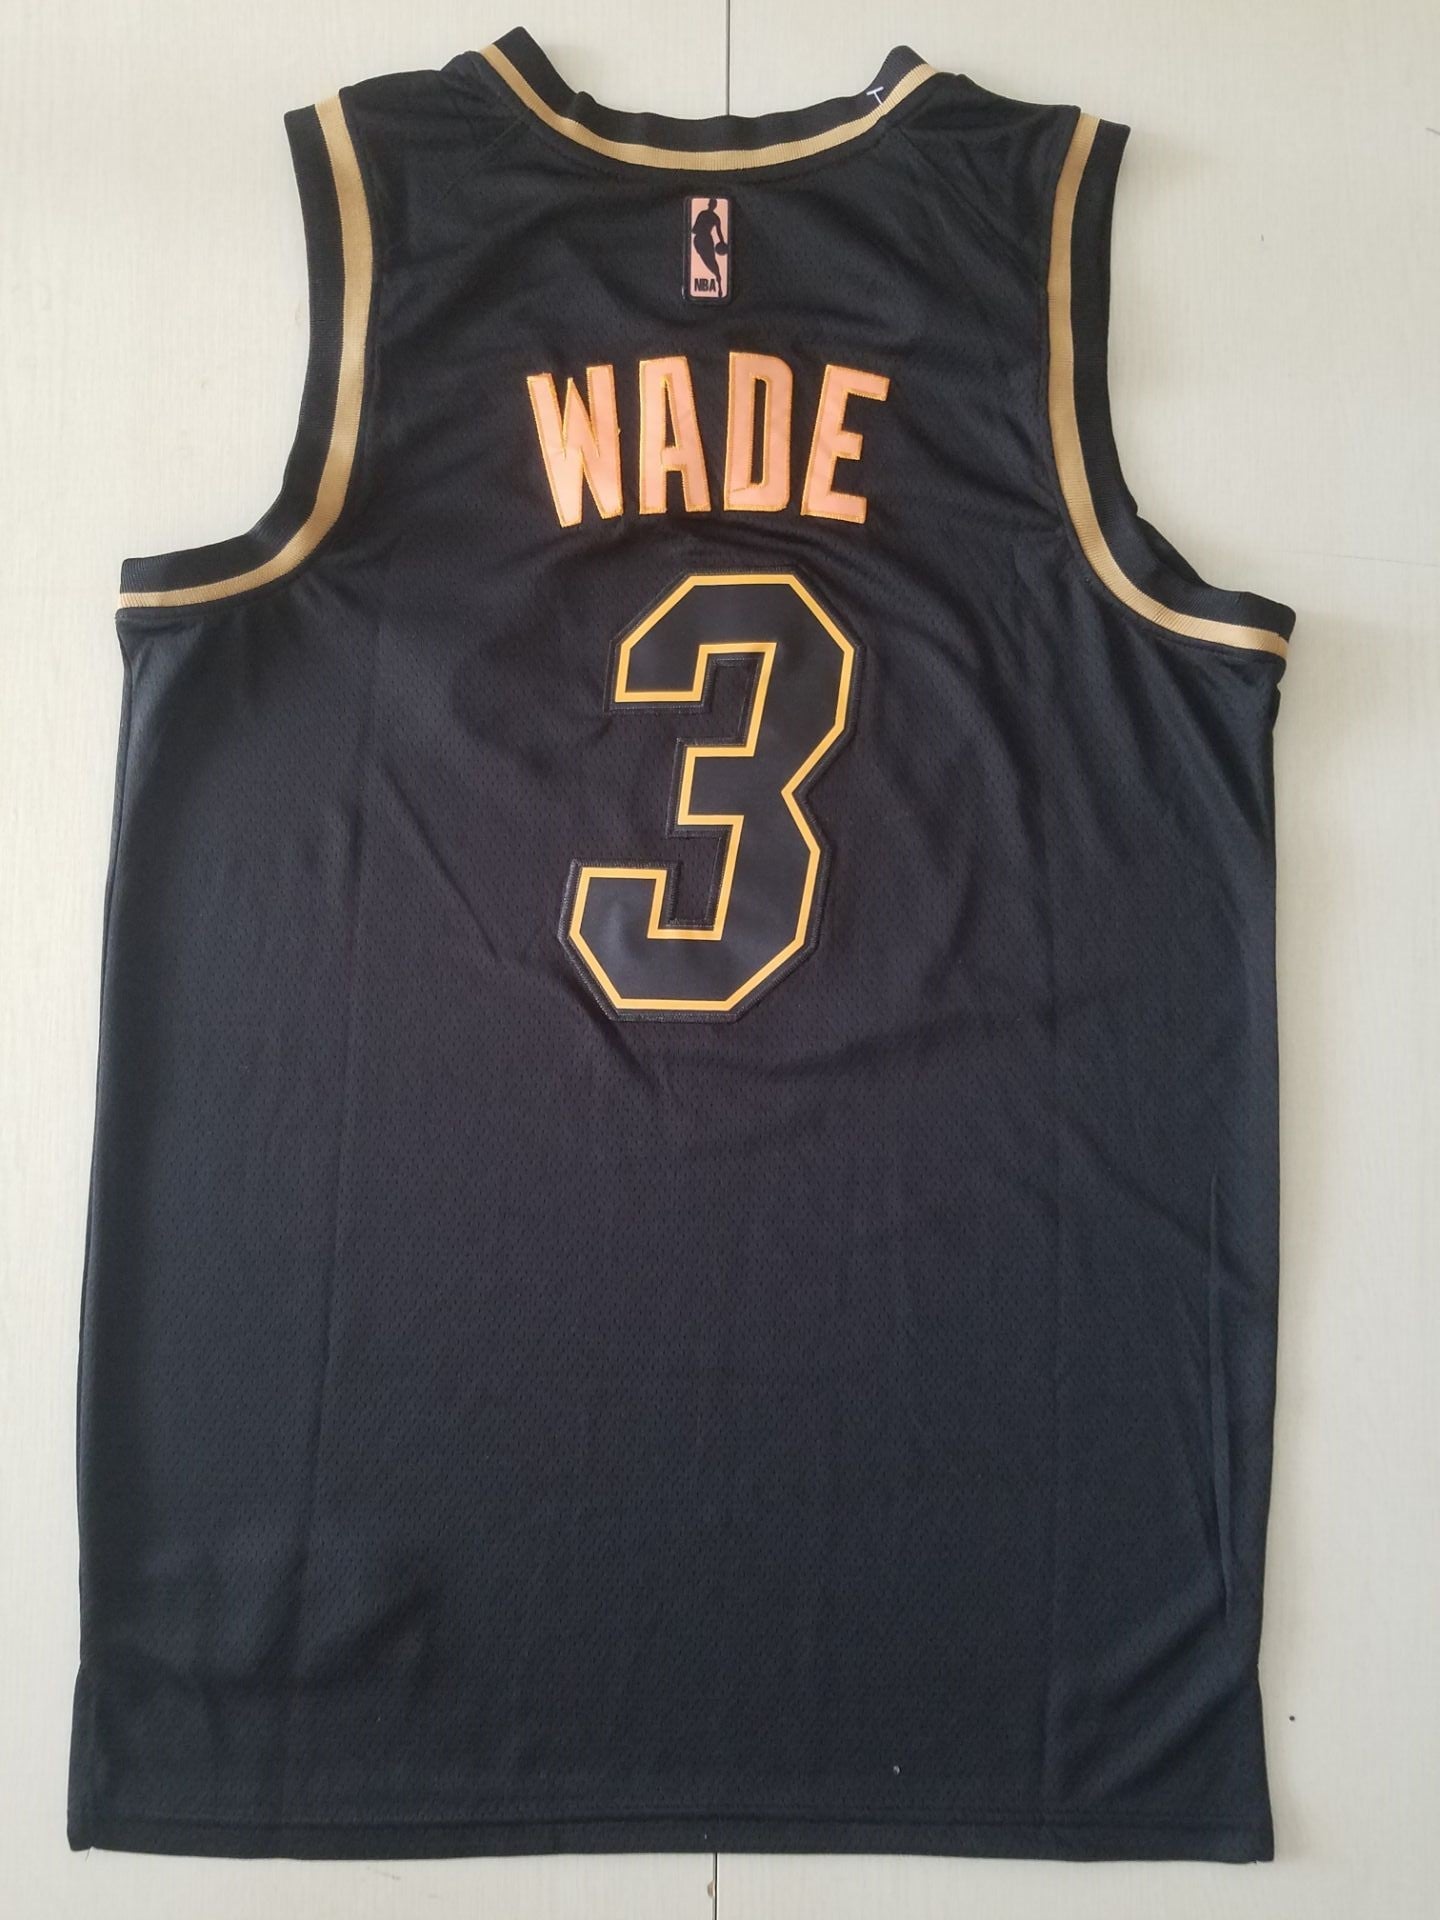 Men's Miami Heat Dwyane Wade #3 NBA Black Swingman Player Jersey